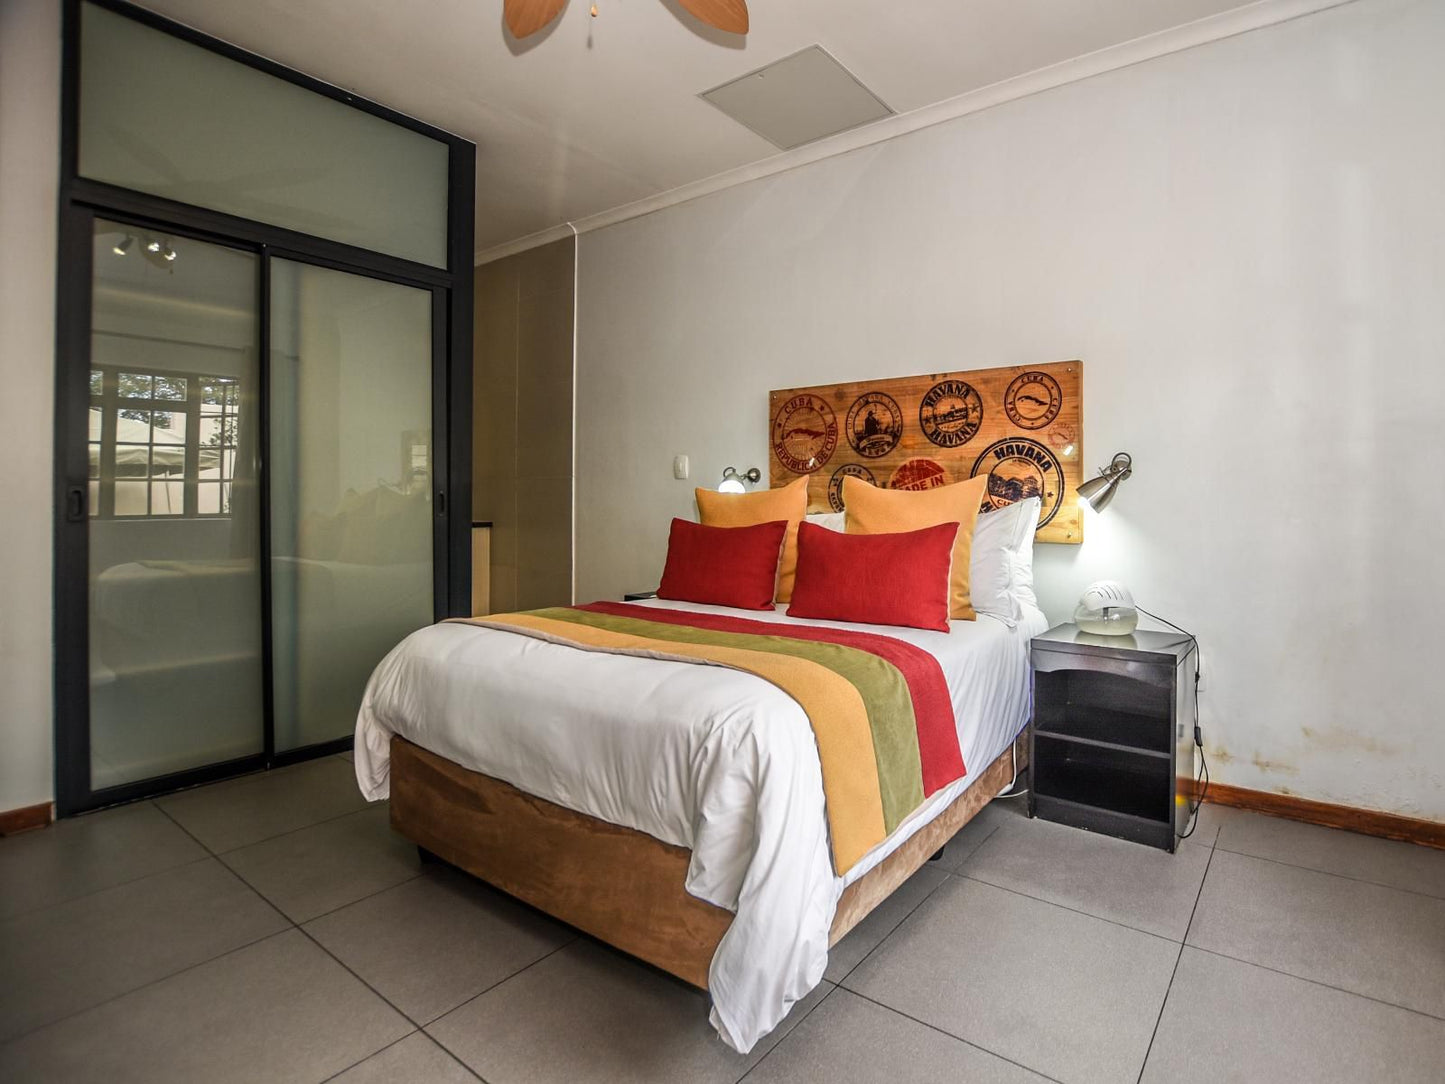 Yalla Yalla Boutique Hotel Die Heuwel Witbank Emalahleni Mpumalanga South Africa Bedroom